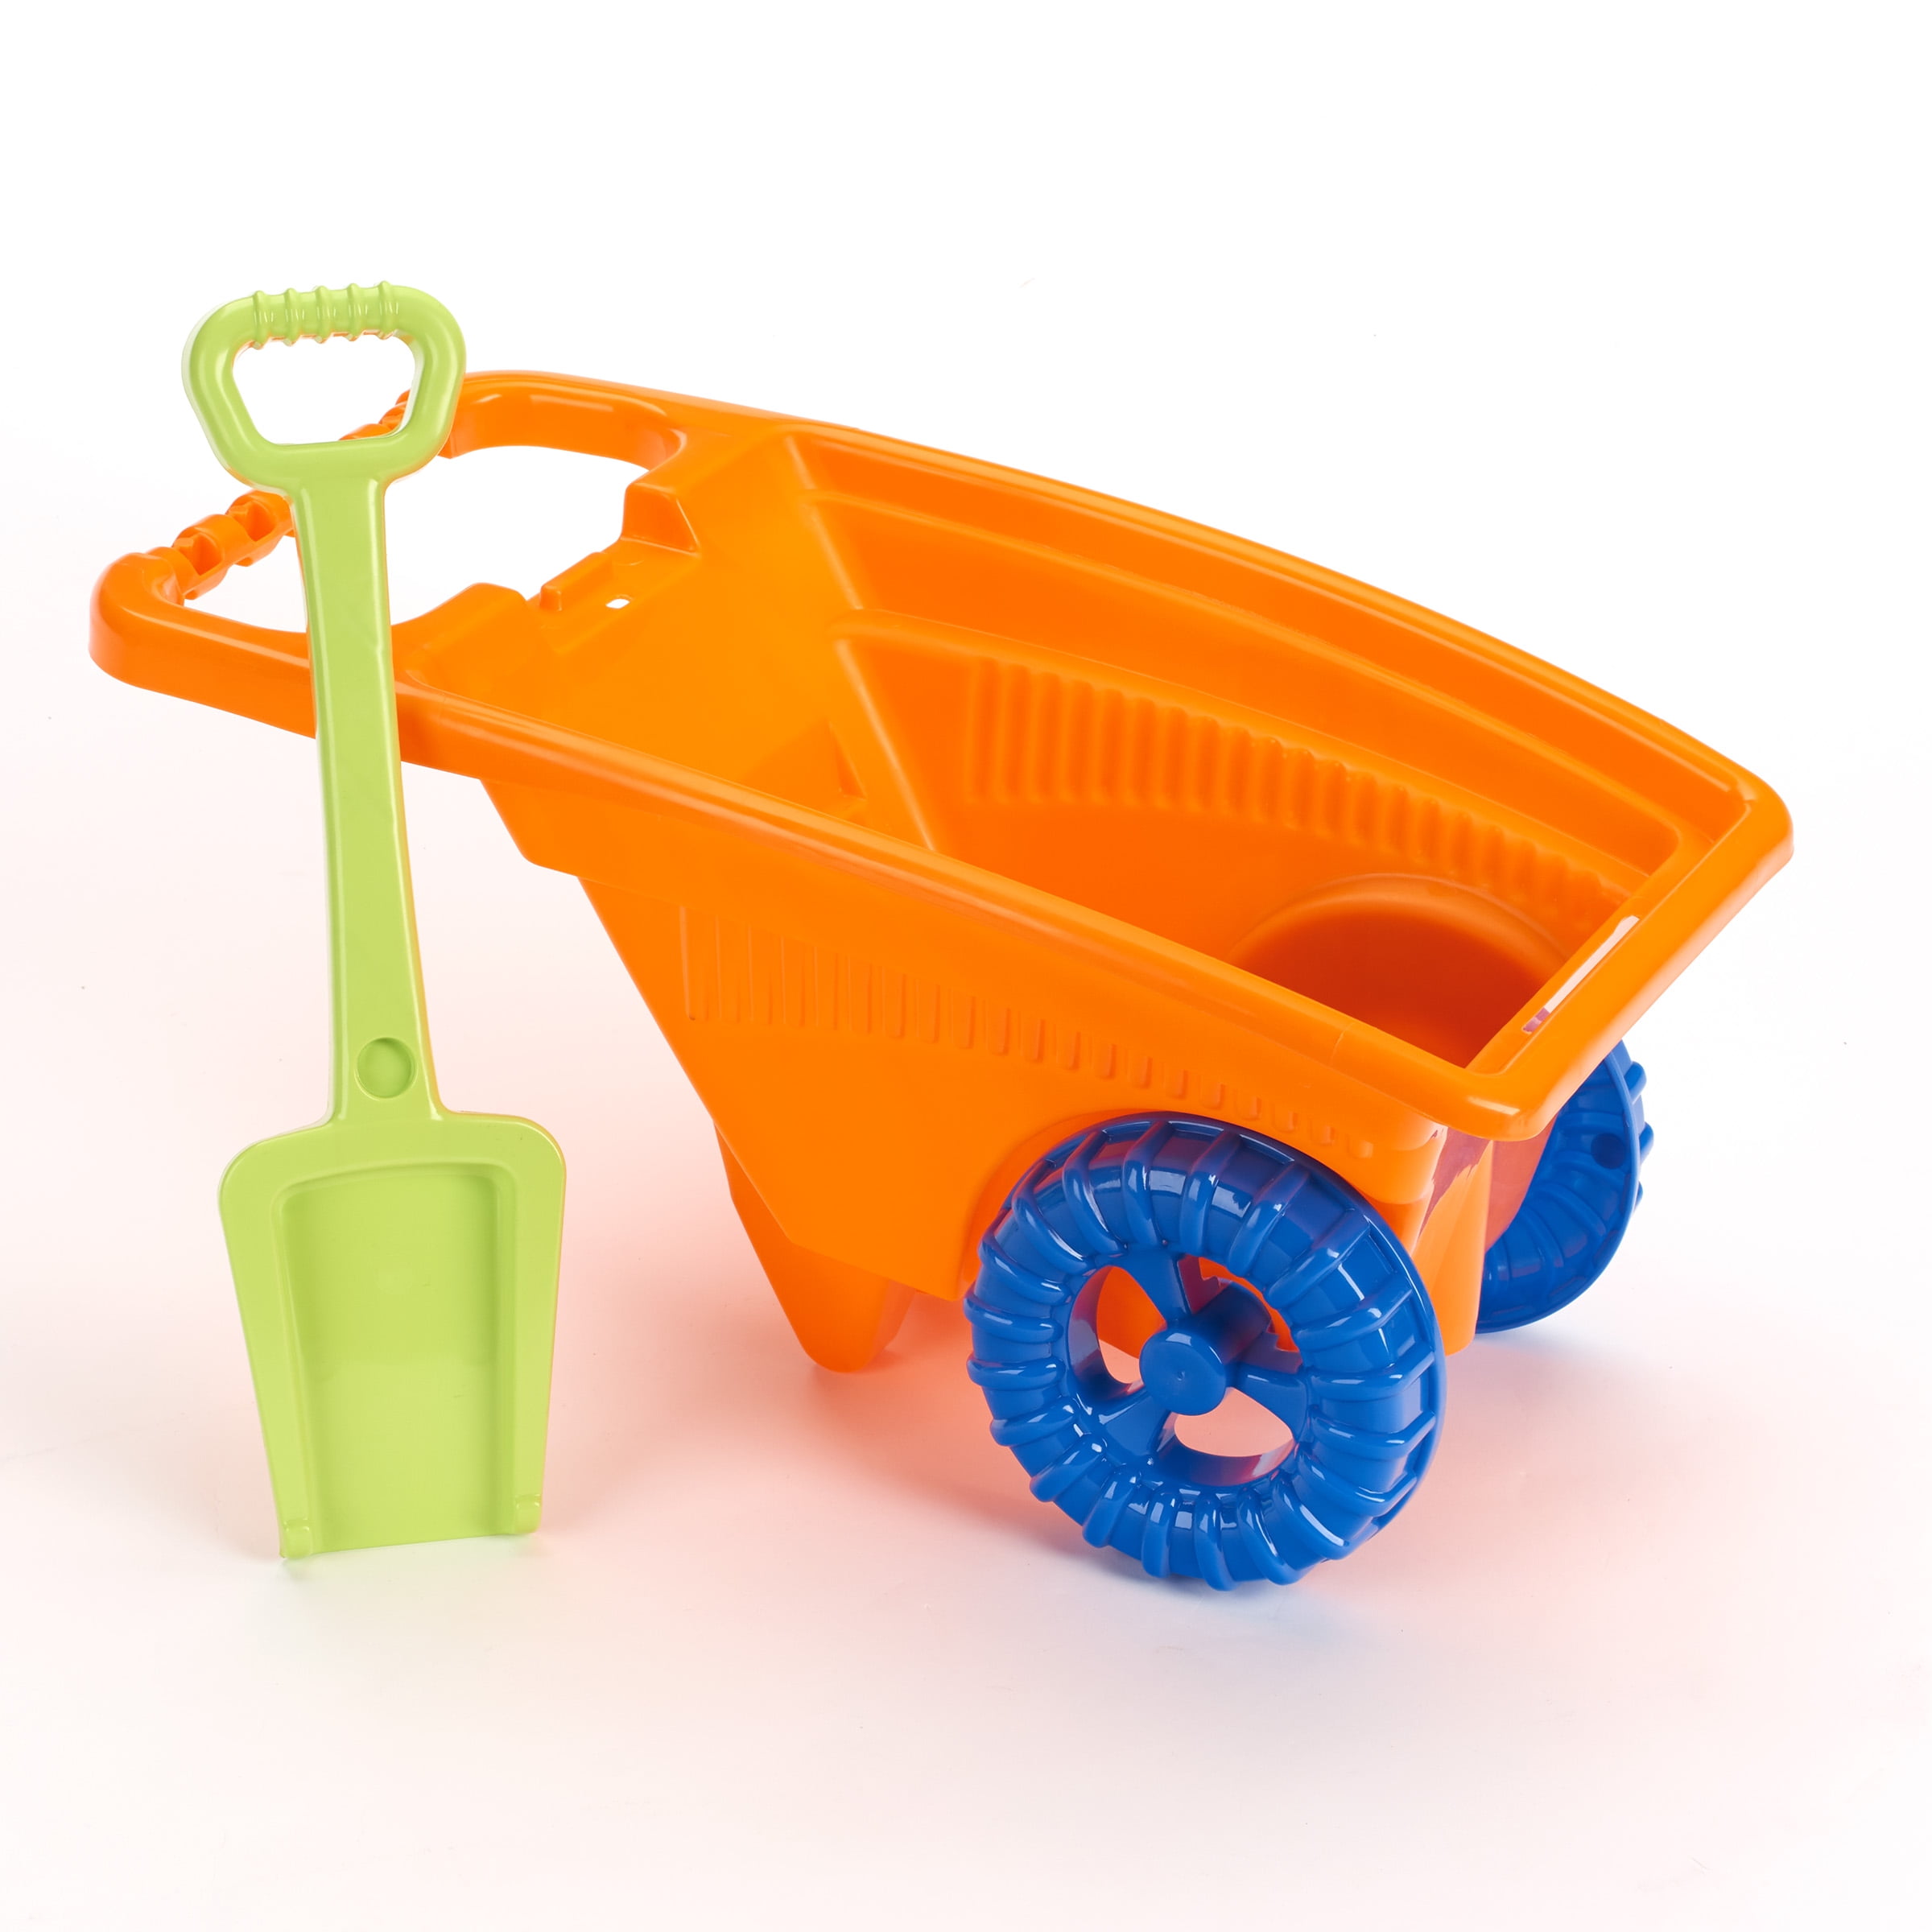 Kids Toy Plastic Wheel Barrow Childrens Playset Garden With Tools 